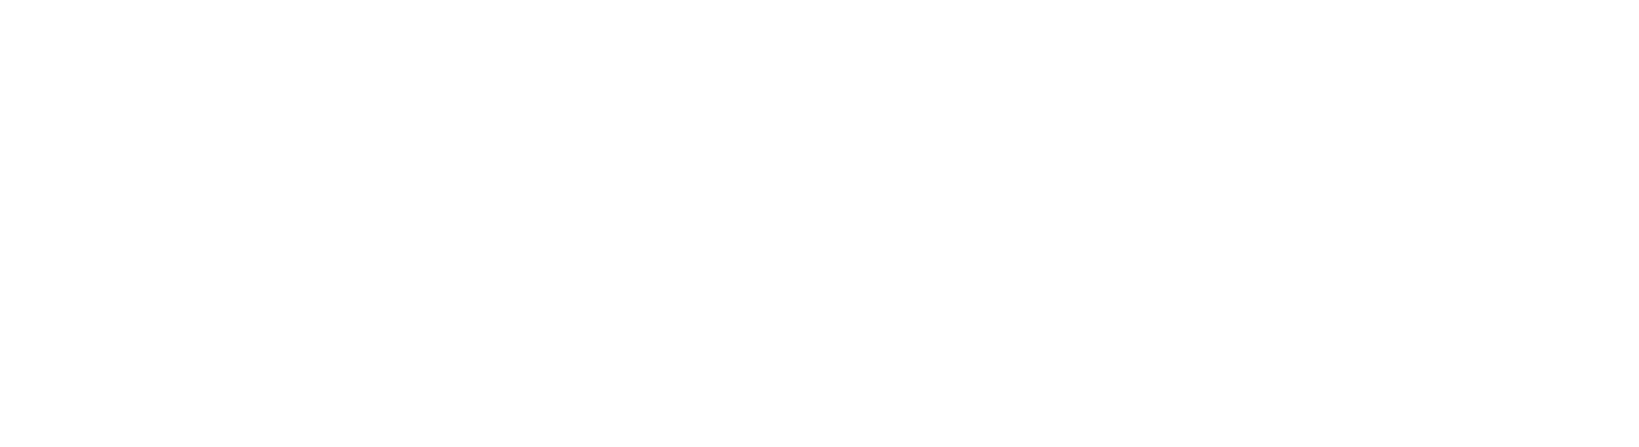 Boddi Boo